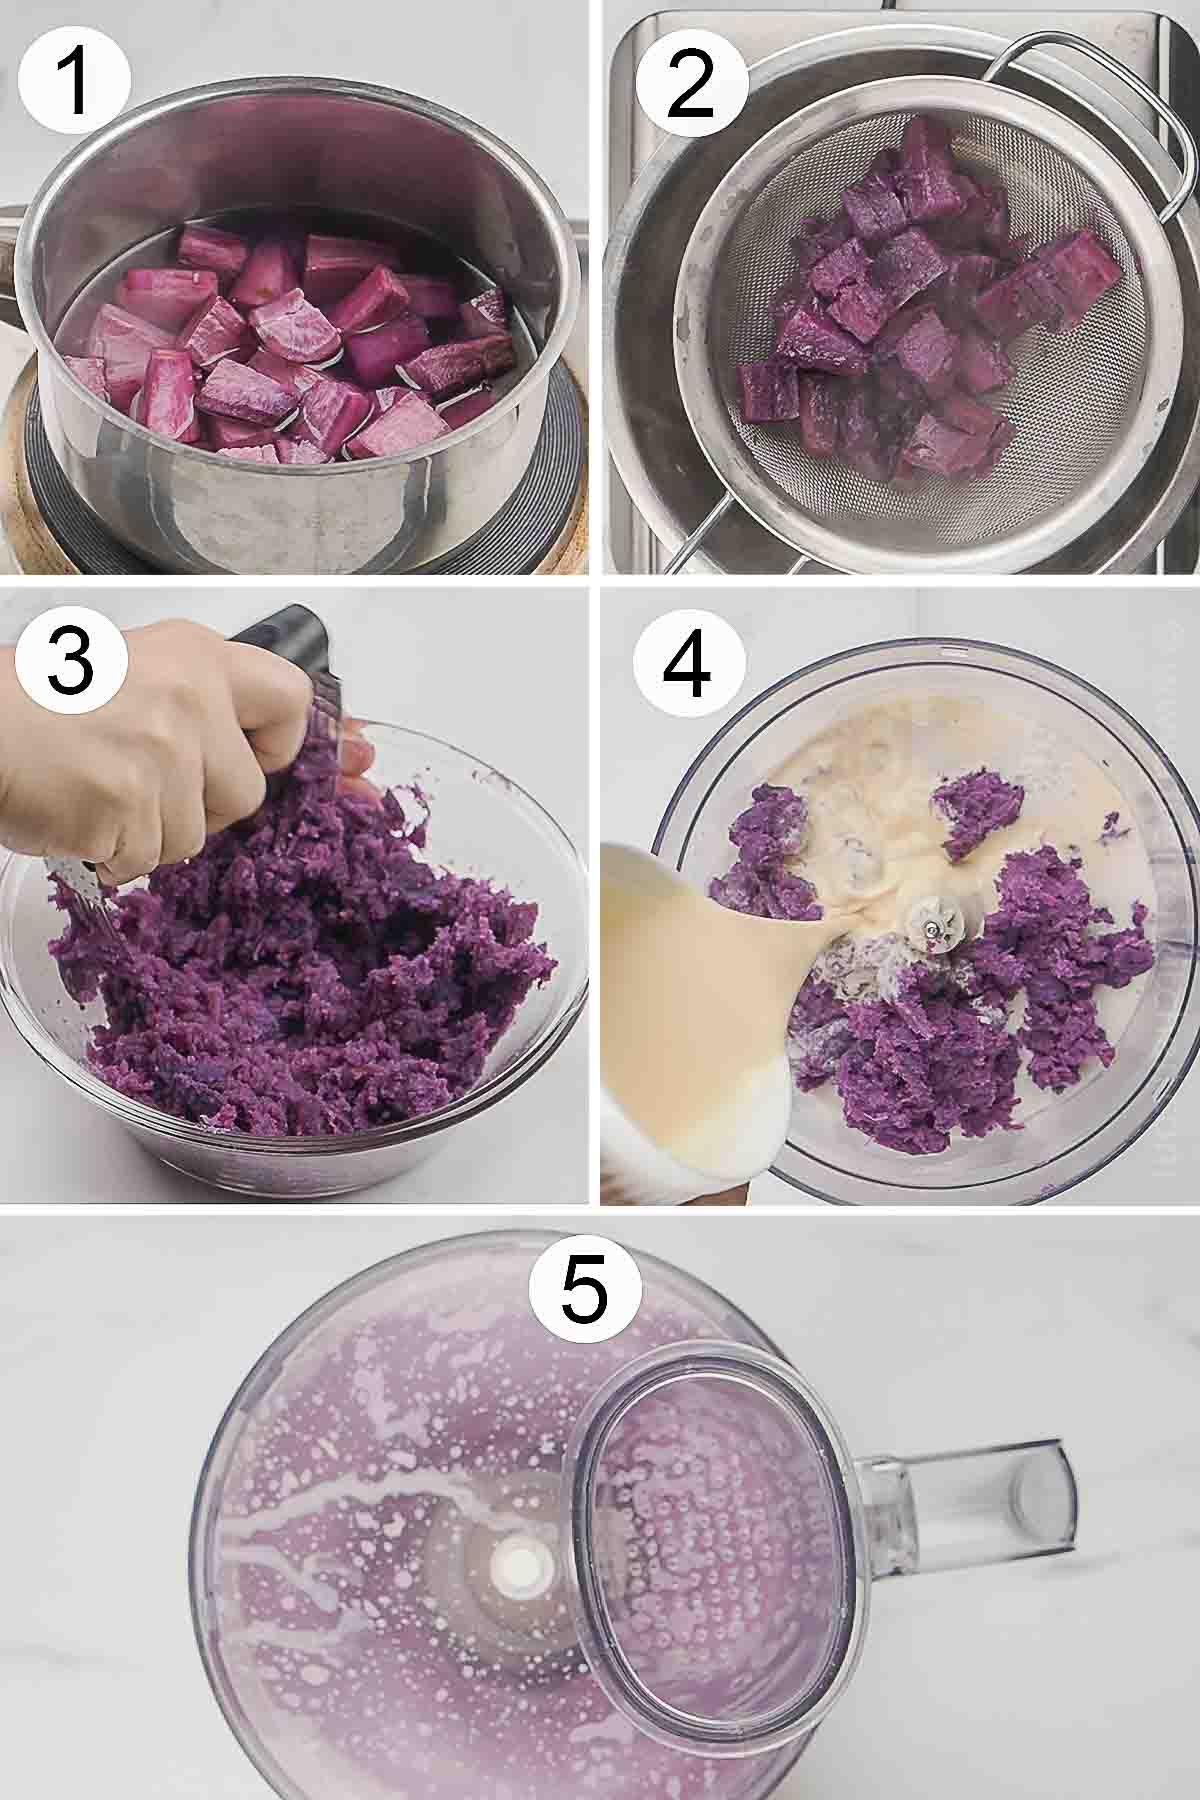 step-by-step process on how to make ube halaya jam.